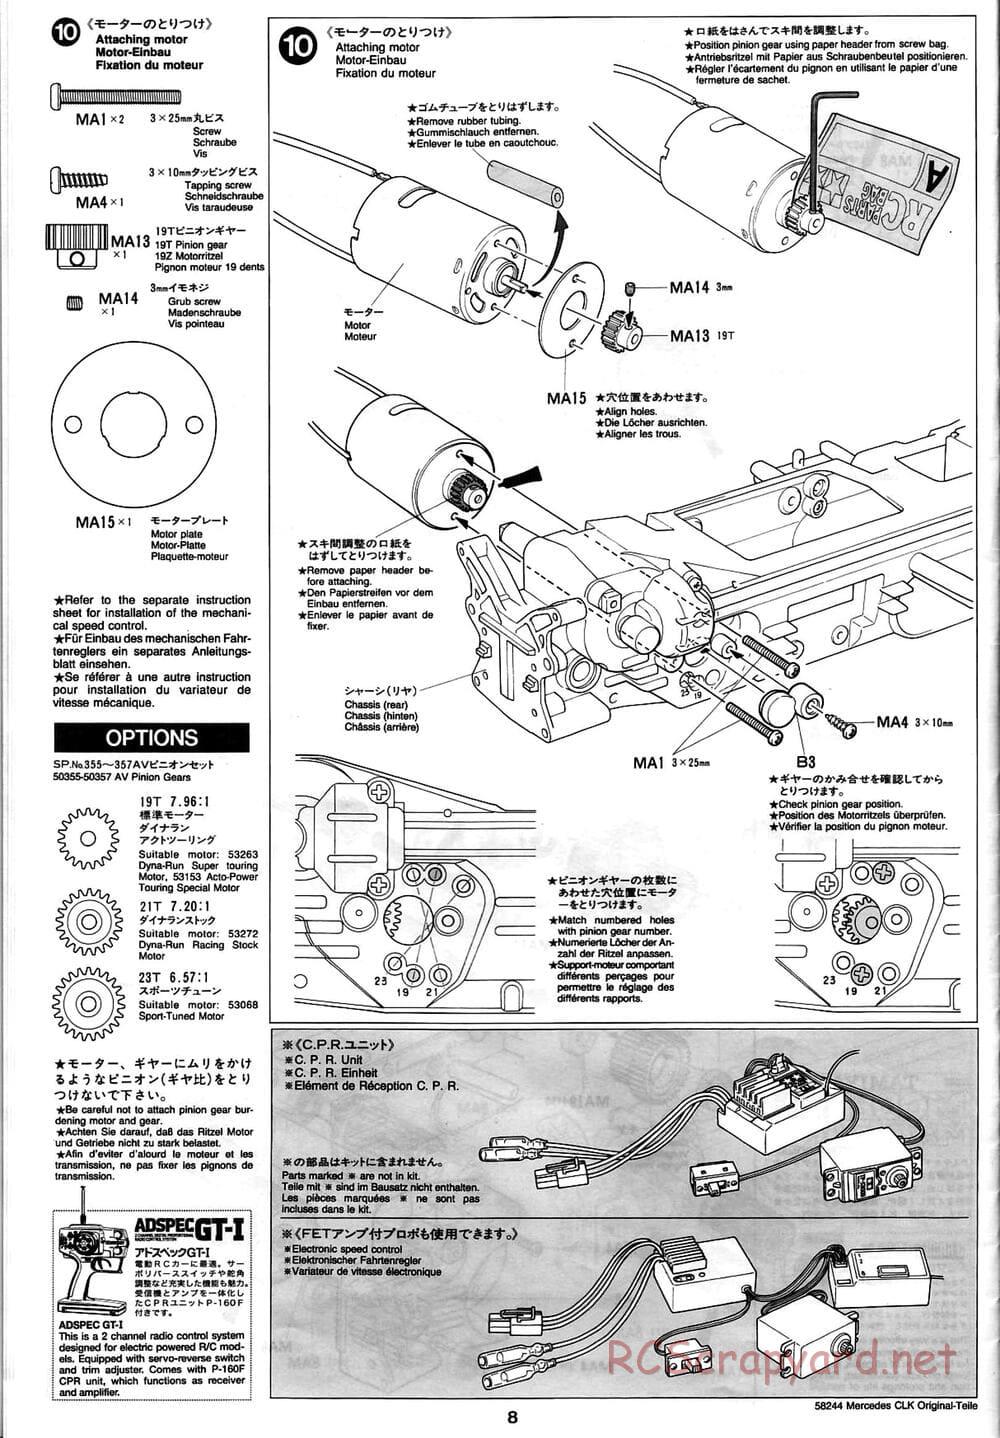 Tamiya - Mercedes CLK-GTR Original-Teile - TL-01 Chassis - Manual - Page 8